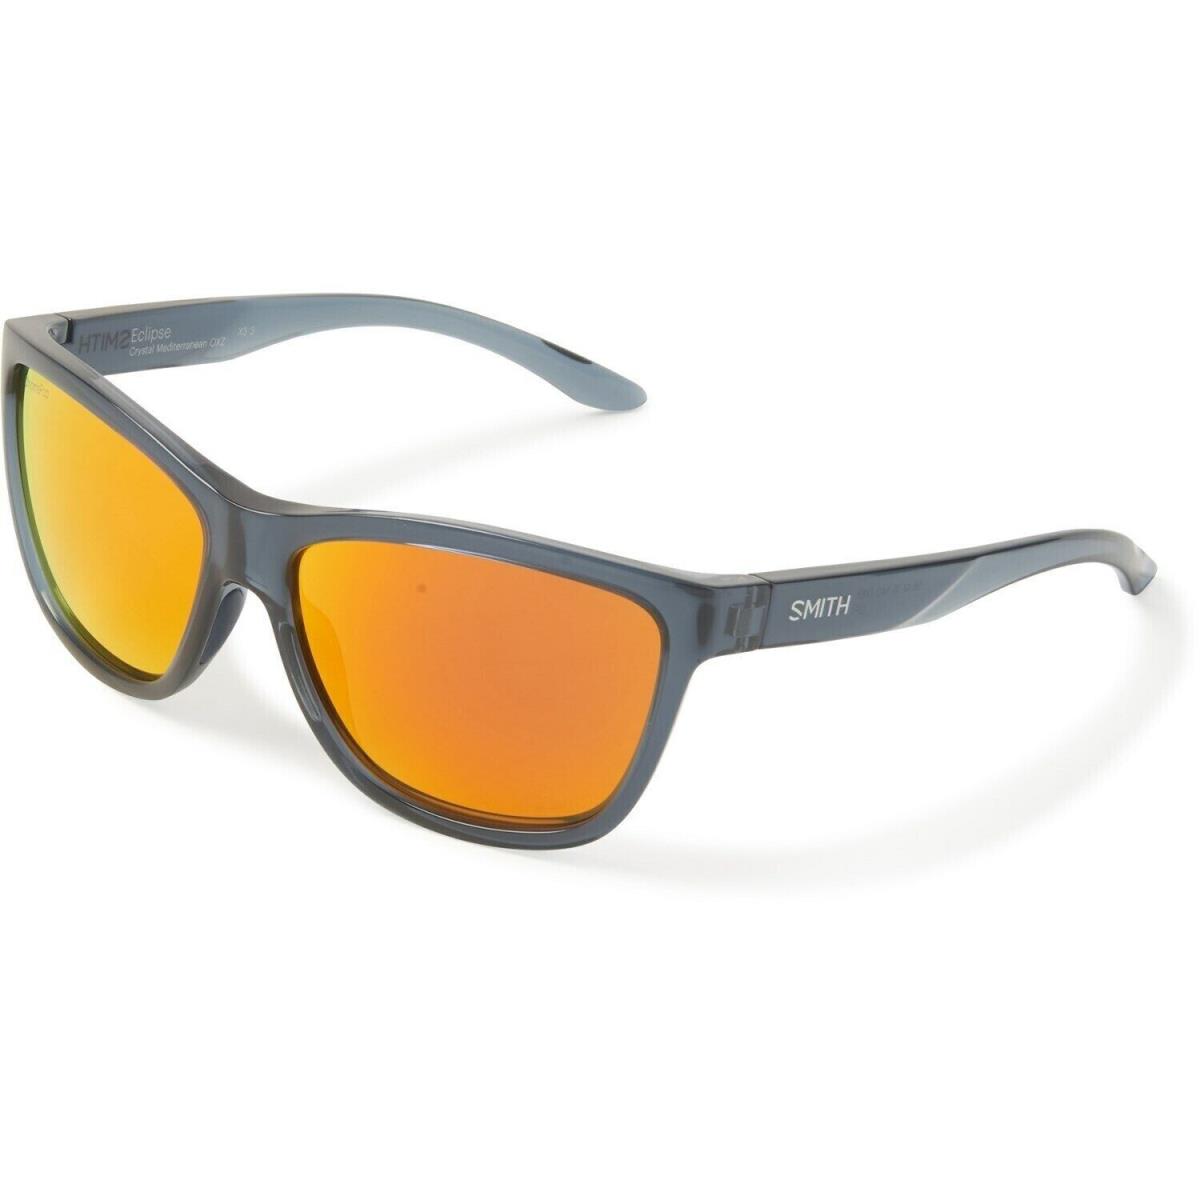 Smith Sunglasses - Eclipse OXZ/X6 - Crystal Mediterranean/gray Orange Flash